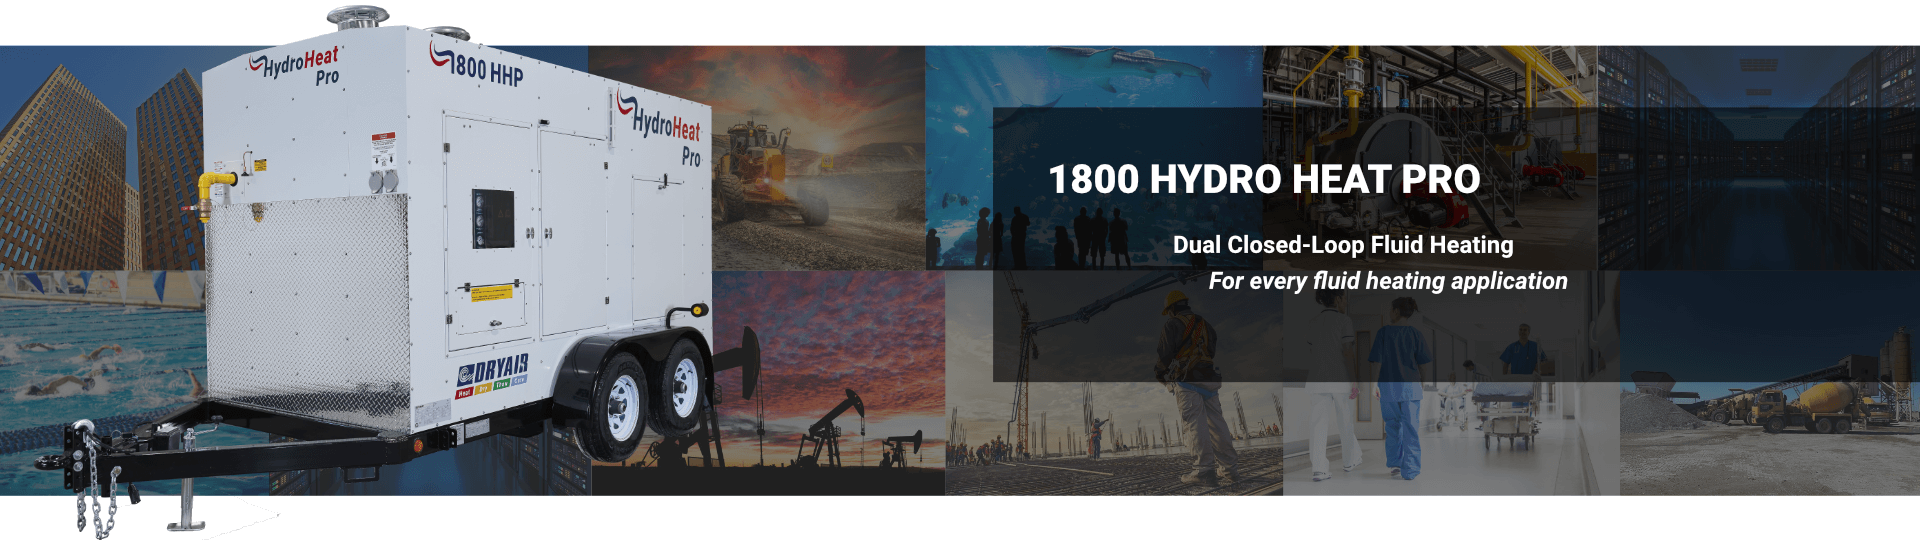 1800 Hydro Heat Pro